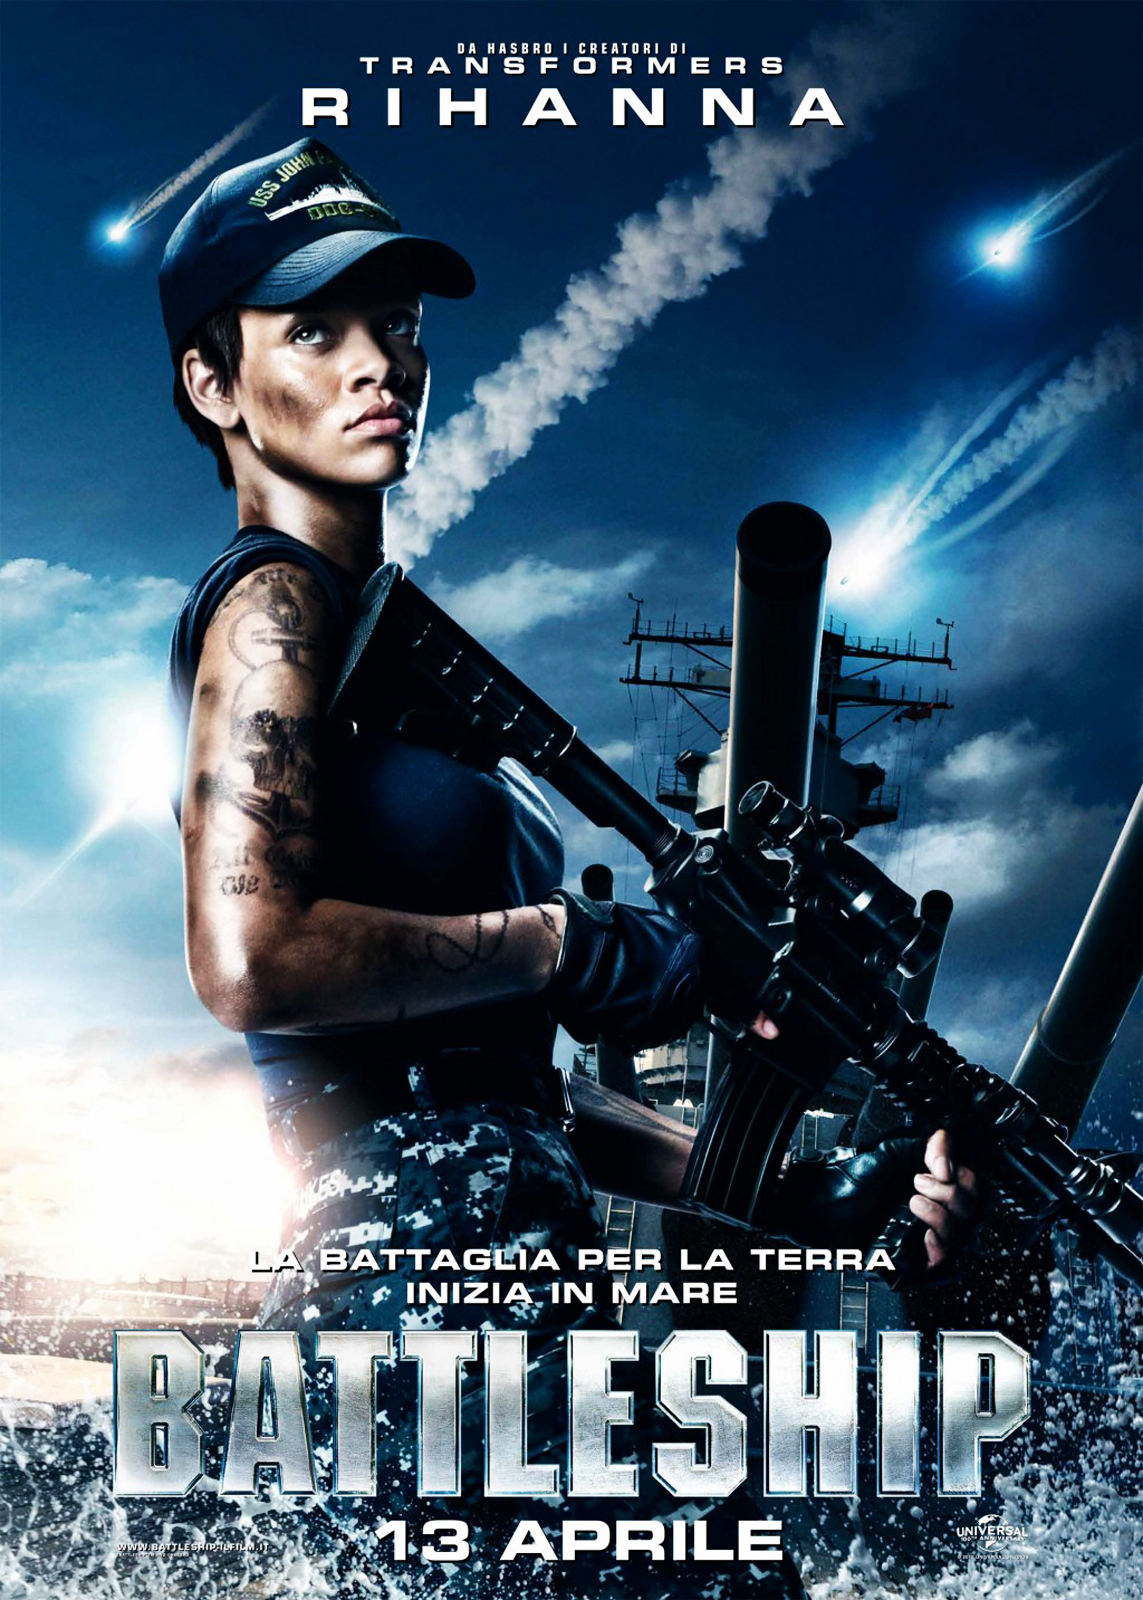 Battleship Movie HD Poster Screenshots Wallpaper In